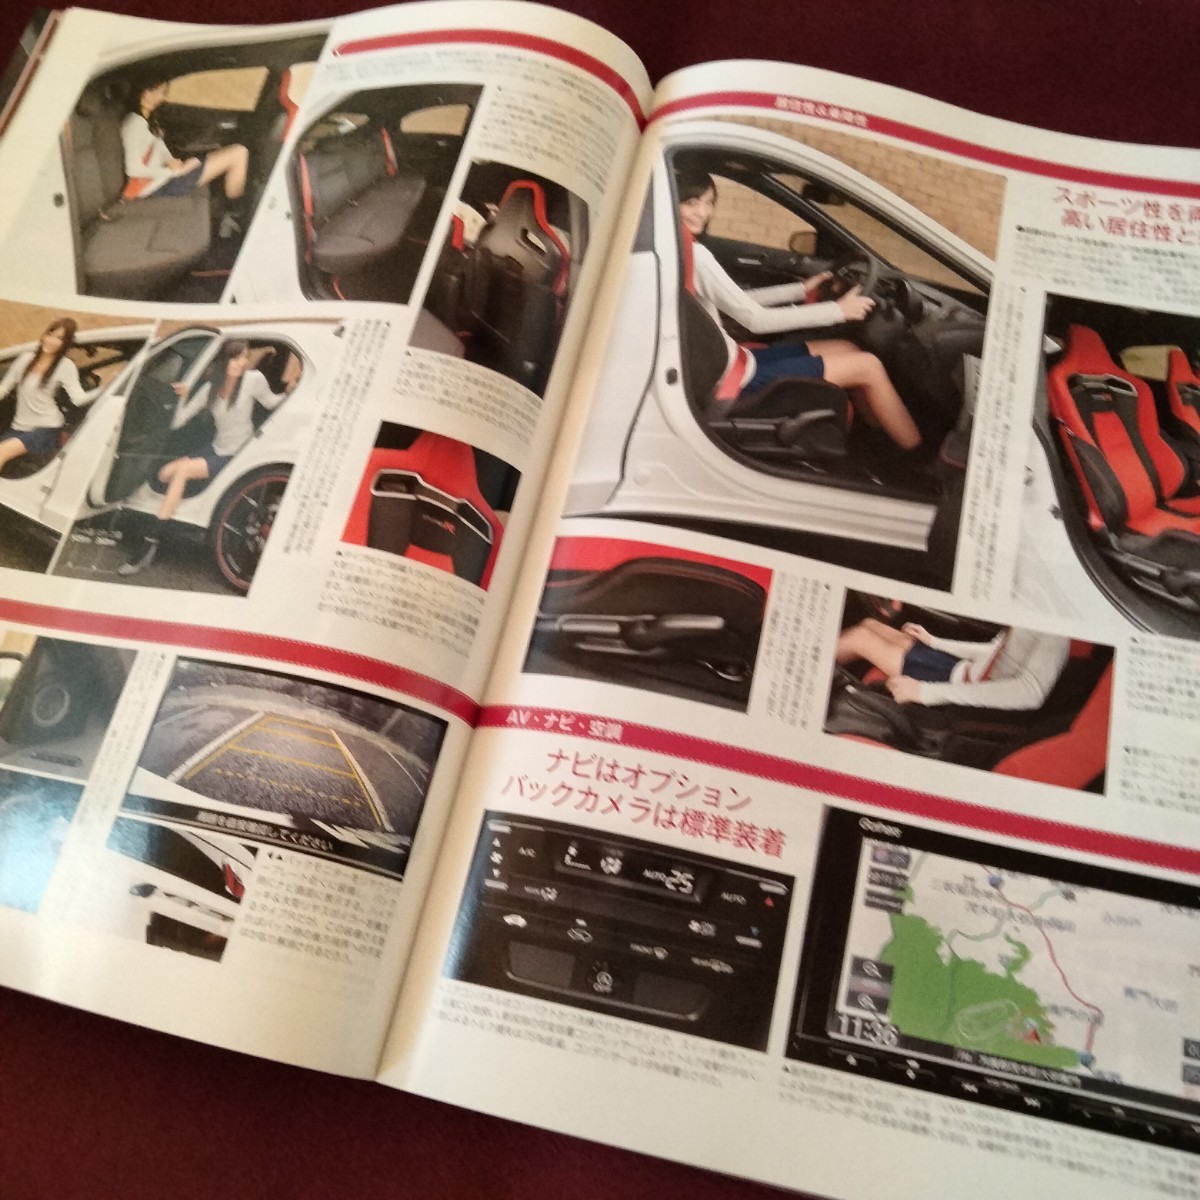  Honda Civic type R. все 88 страница эпоха Heisei 27 год 12 месяц выпуск Honda Civic .. каталог Motor Fan отдельный выпуск 